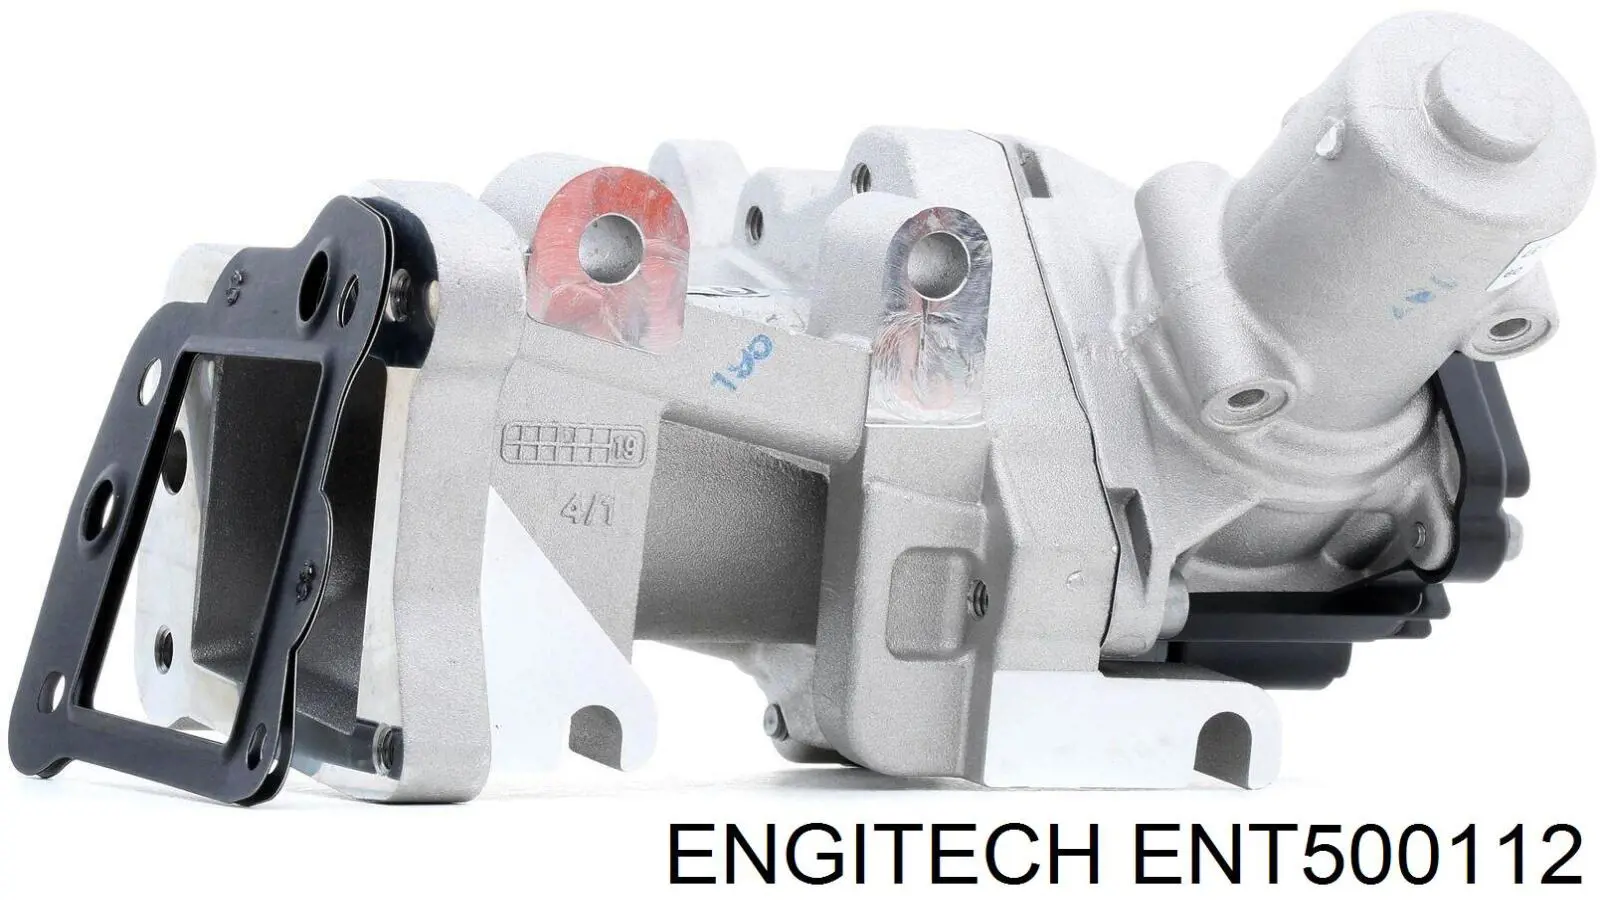 ENT500112 Engitech egr